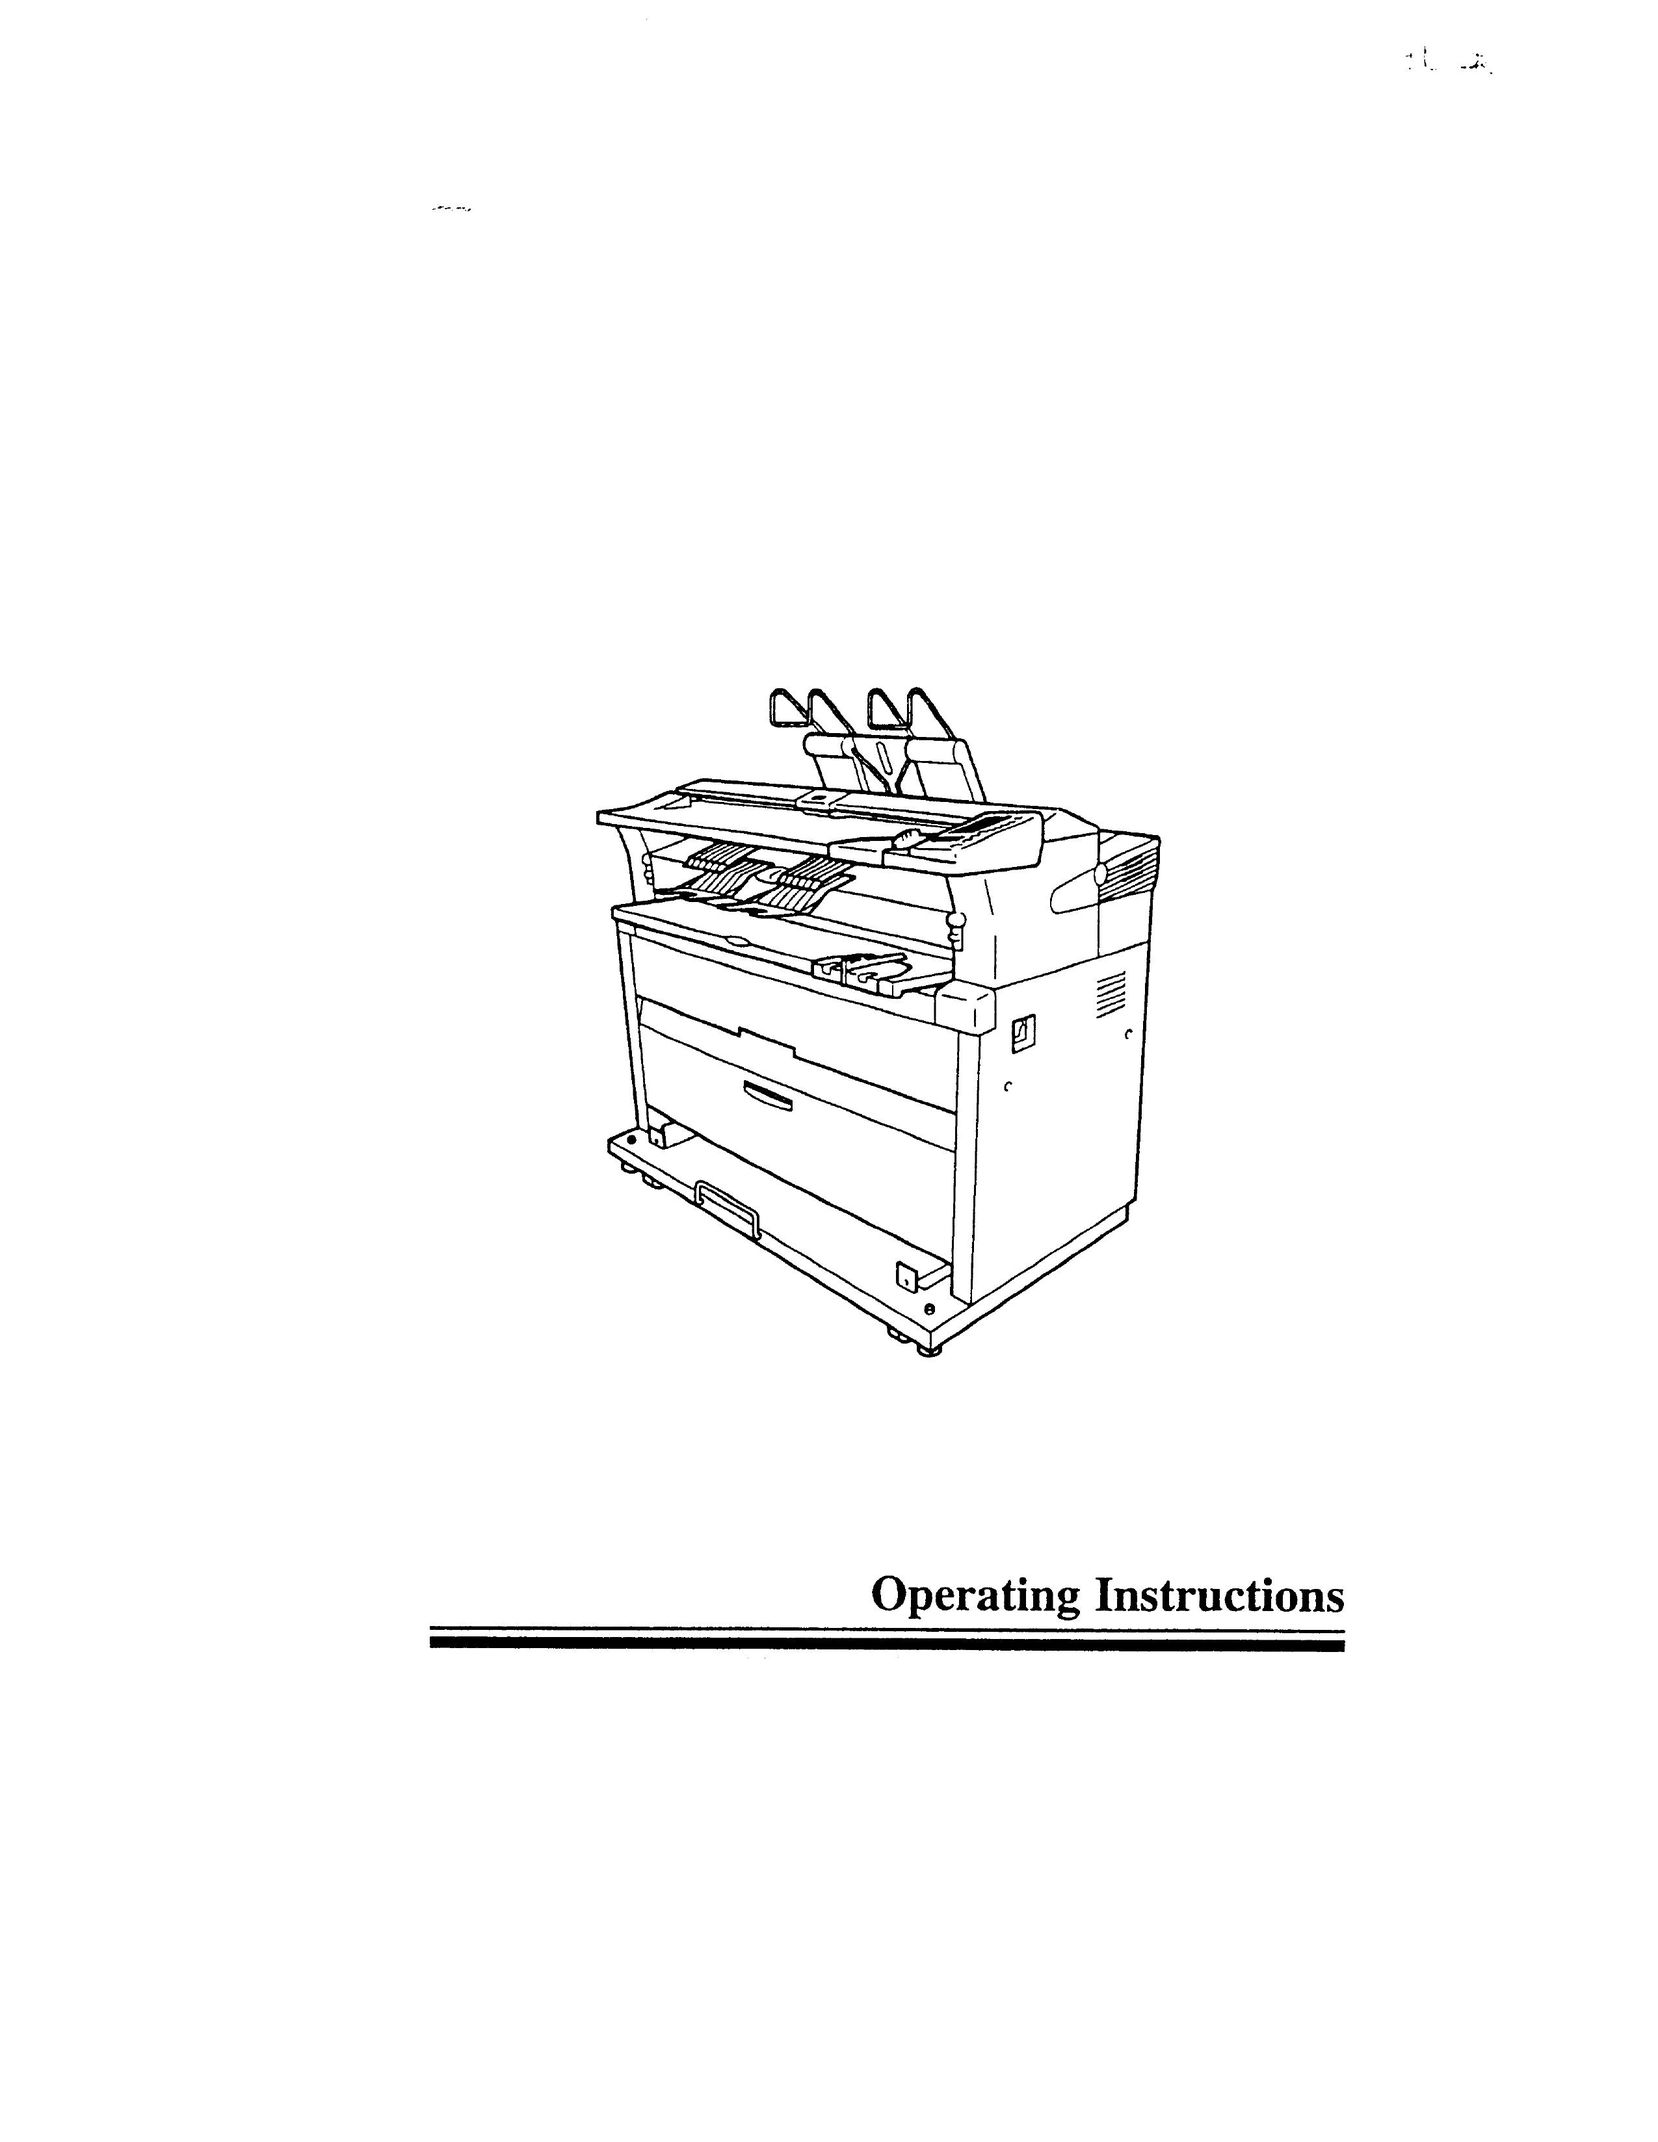 Savin 8700W All in One Printer User Manual